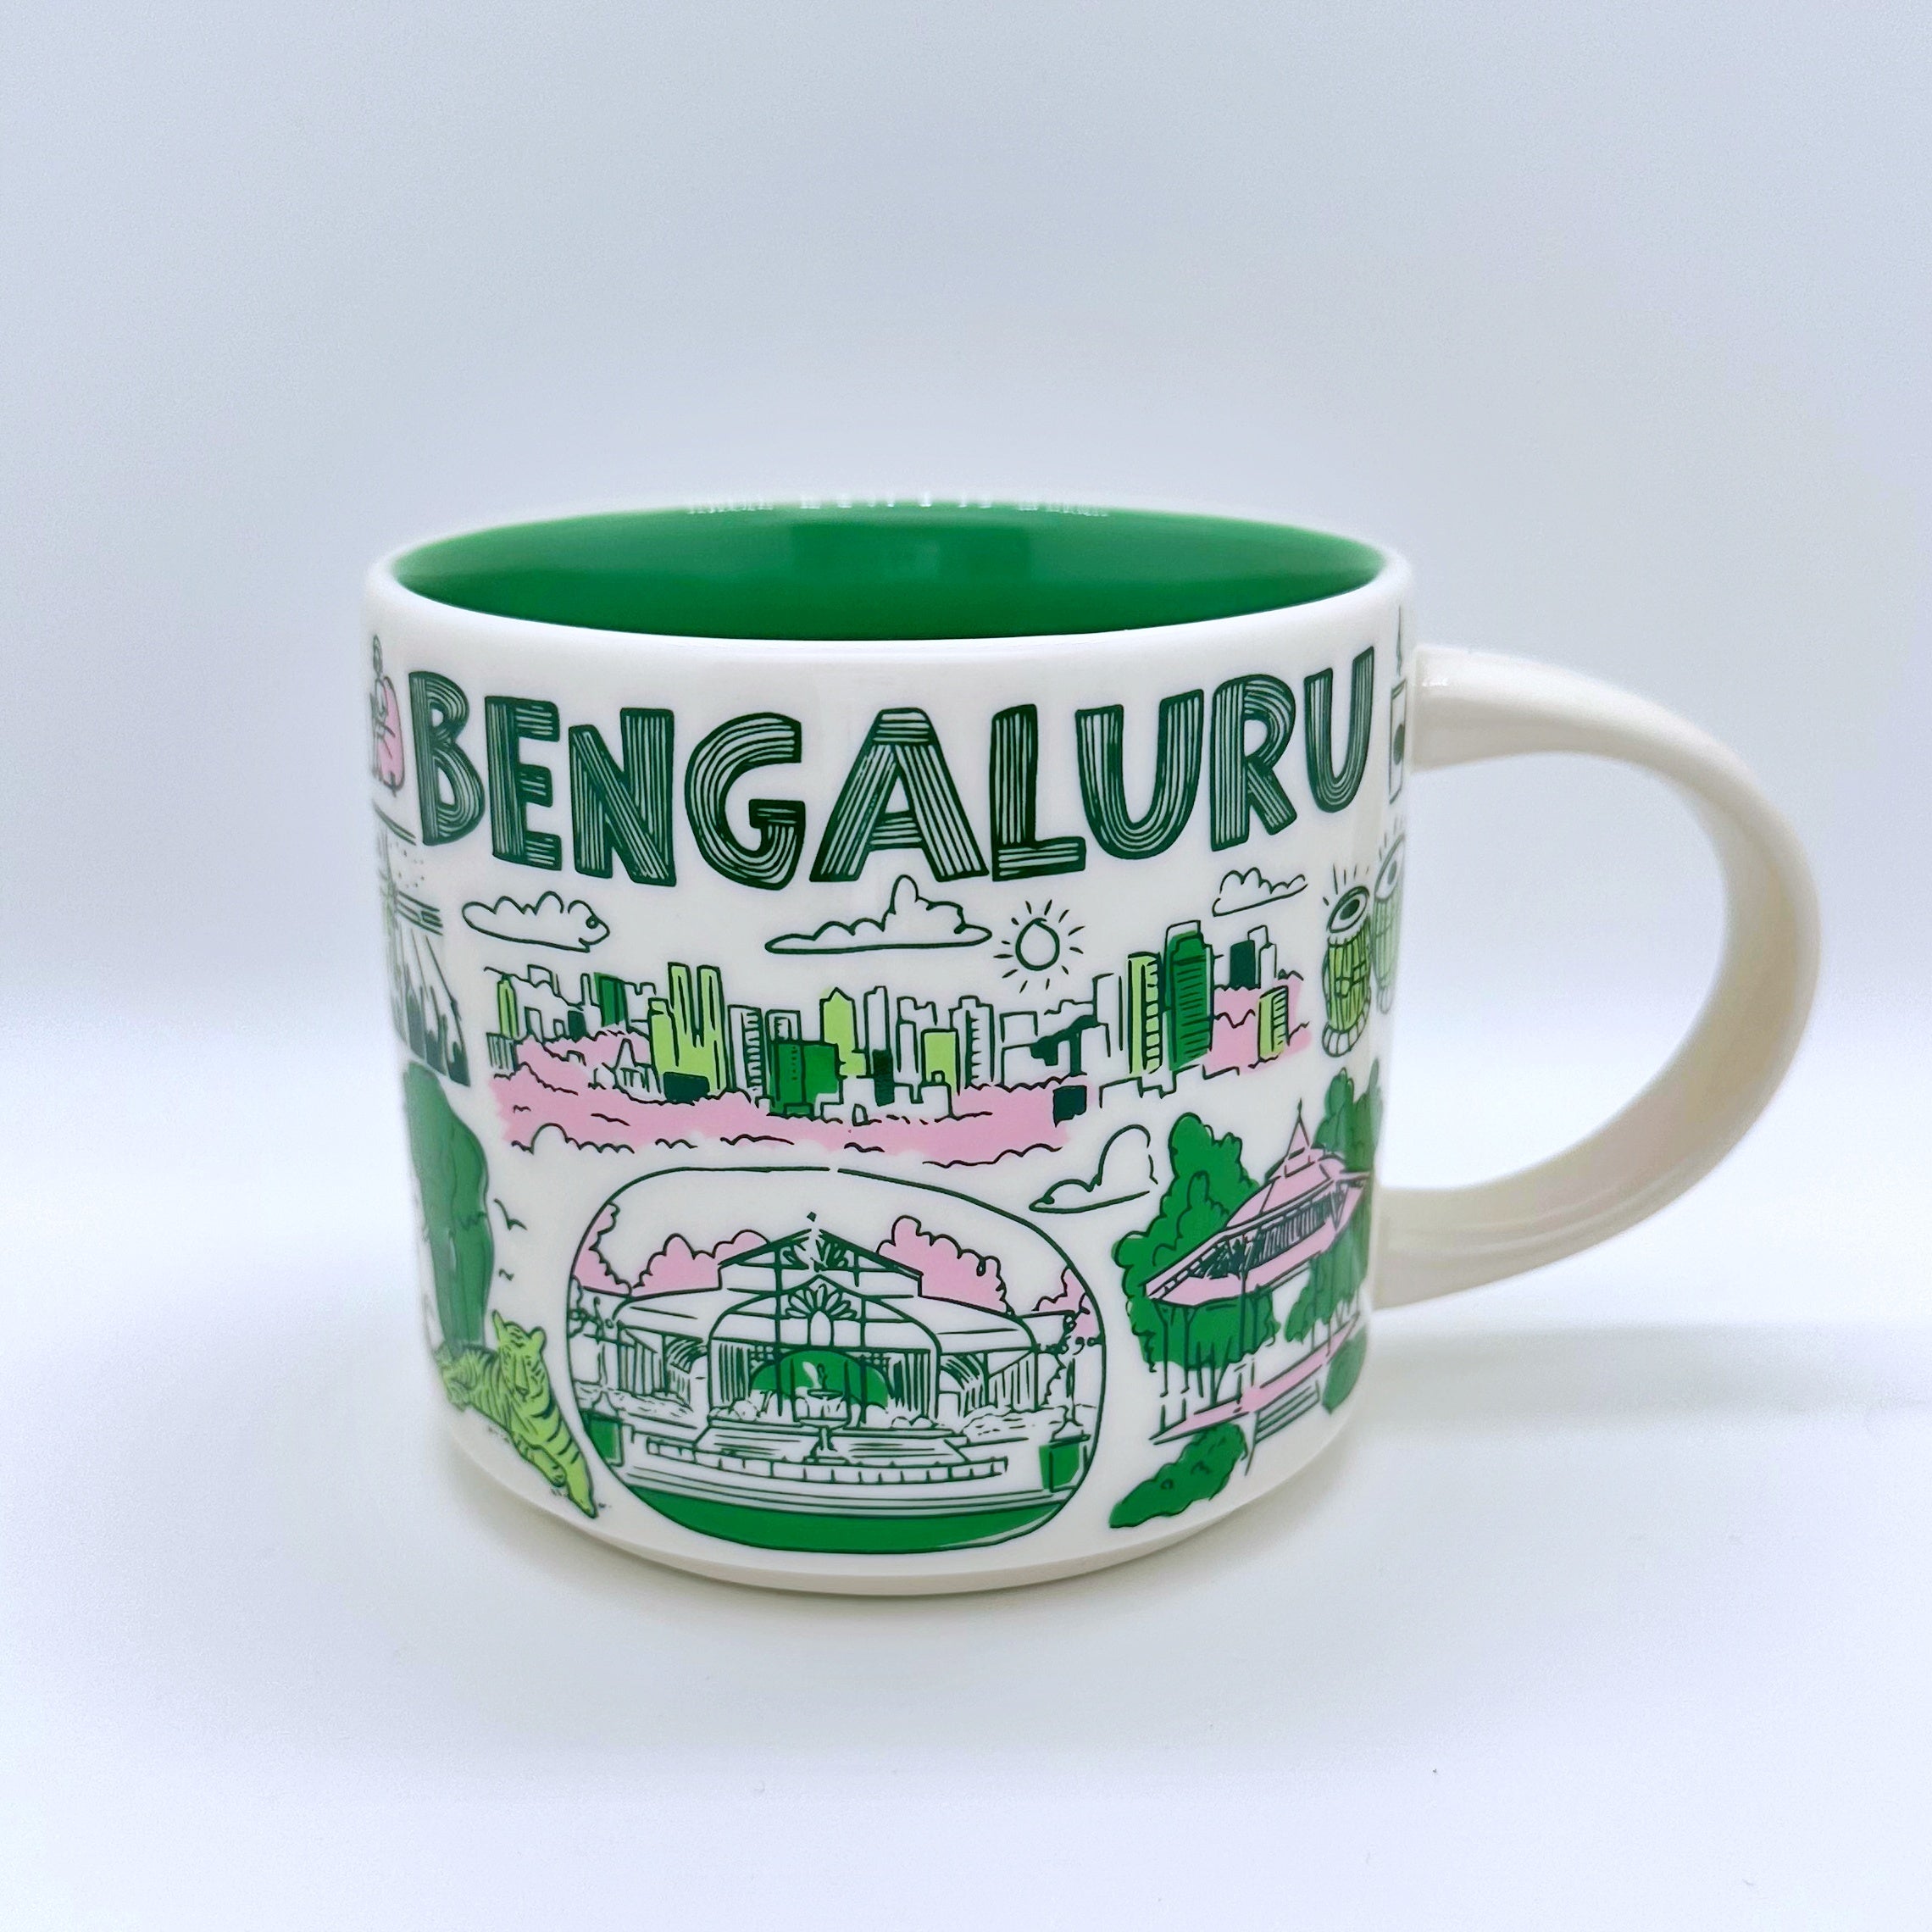 Bengaluru City Kaffee Tasse